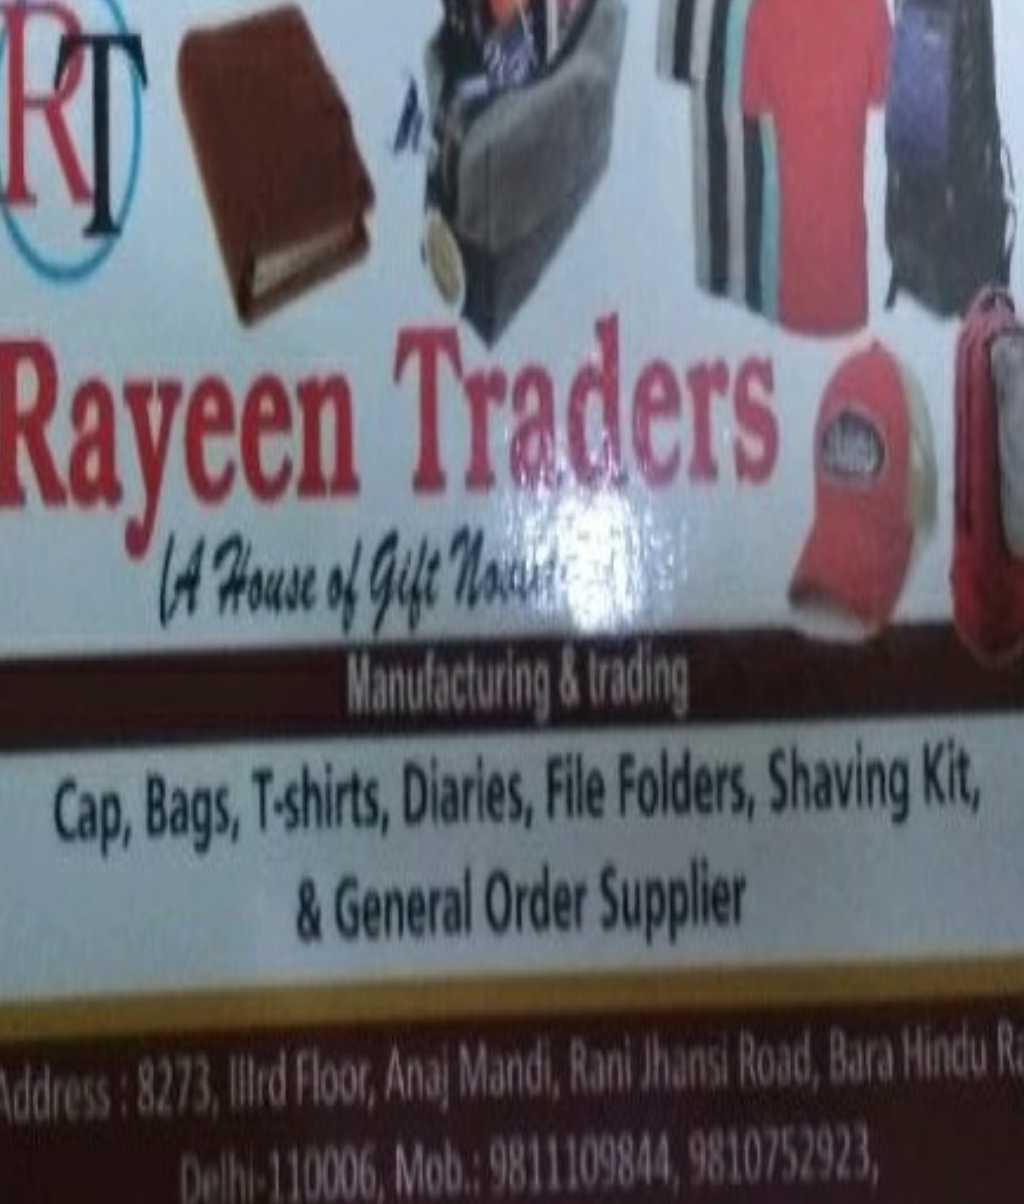 Rayeen Trader